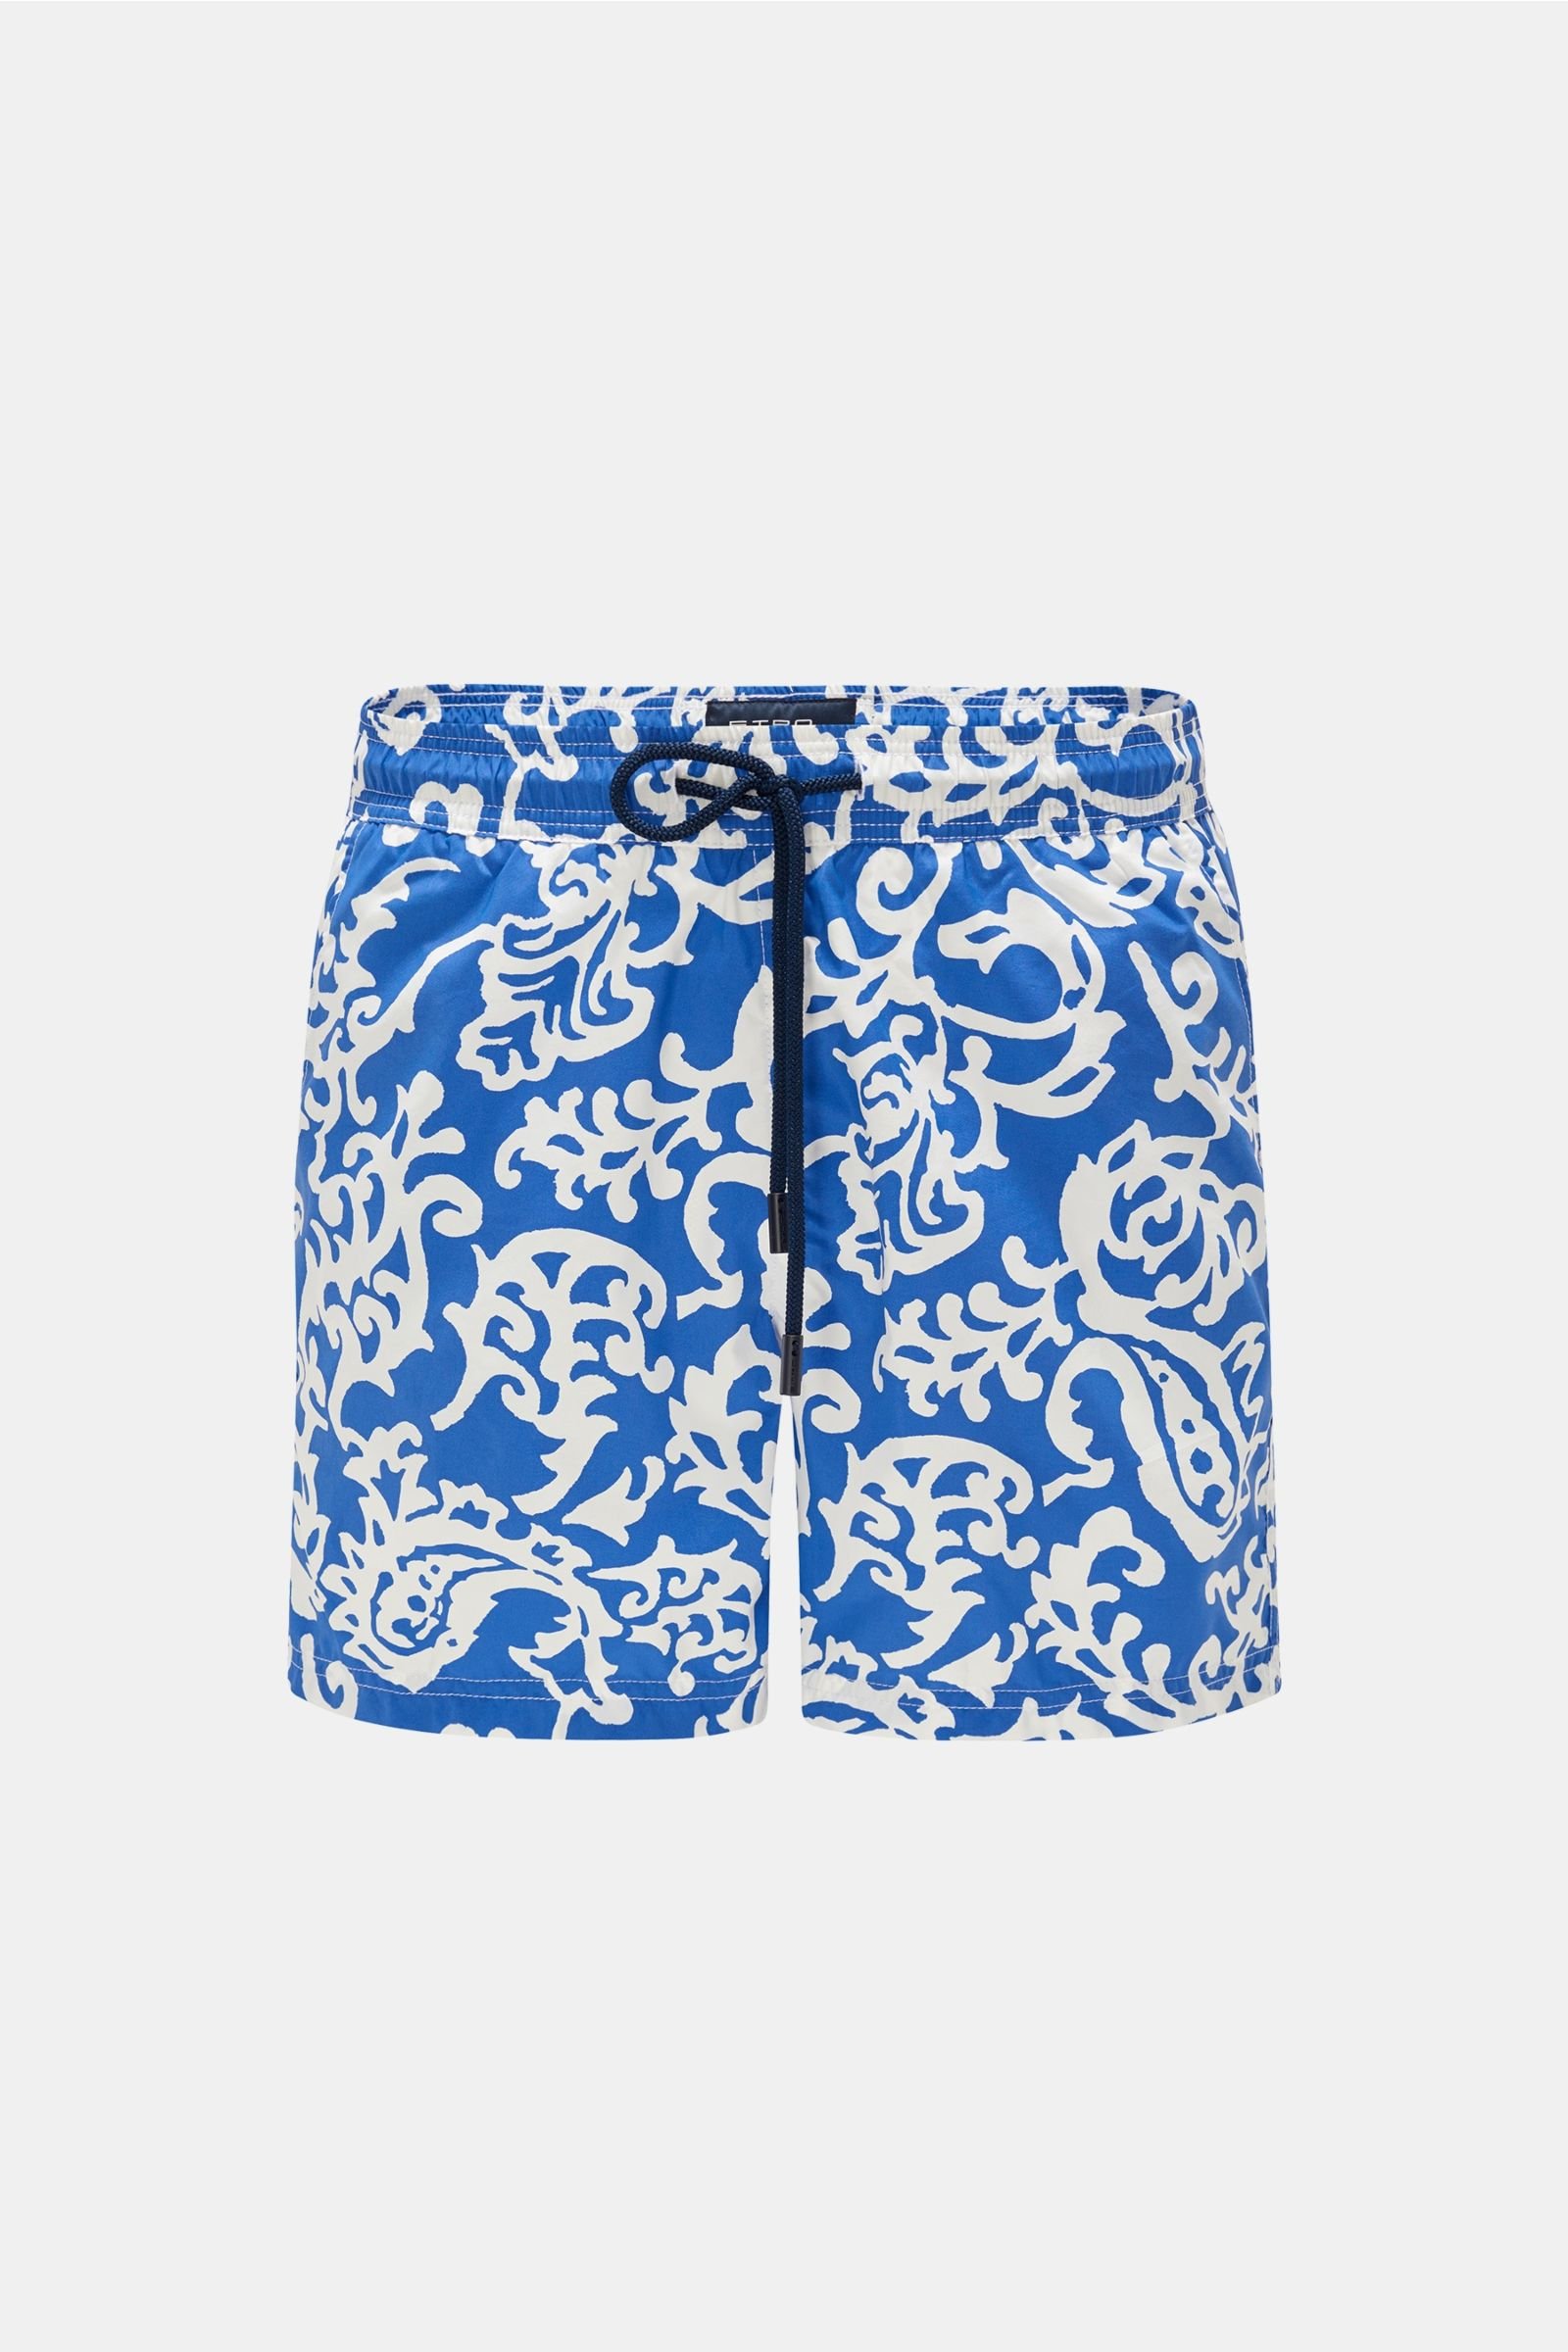 Swim shorts, blue patterned